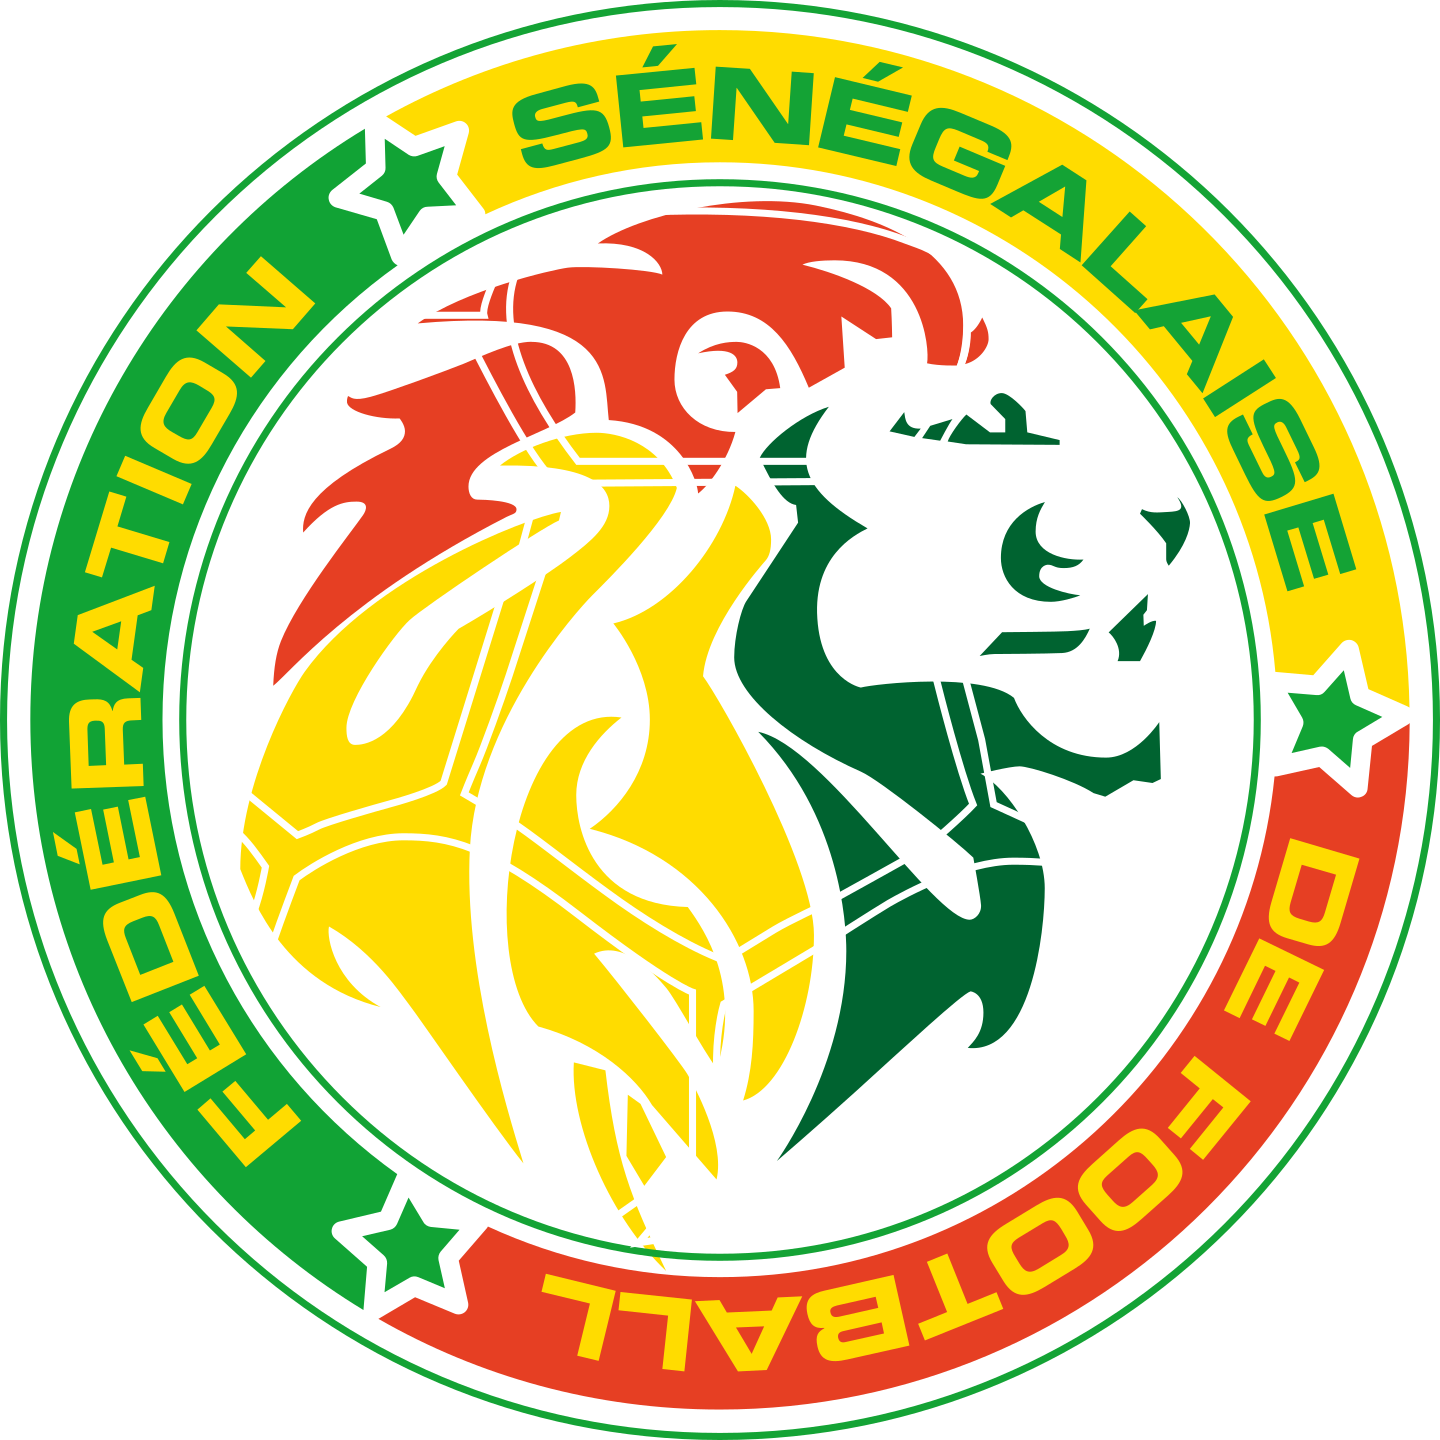 fsf senegal national football team logo 2 - FSF Logo - Équipe du Sénégal de Football Logo